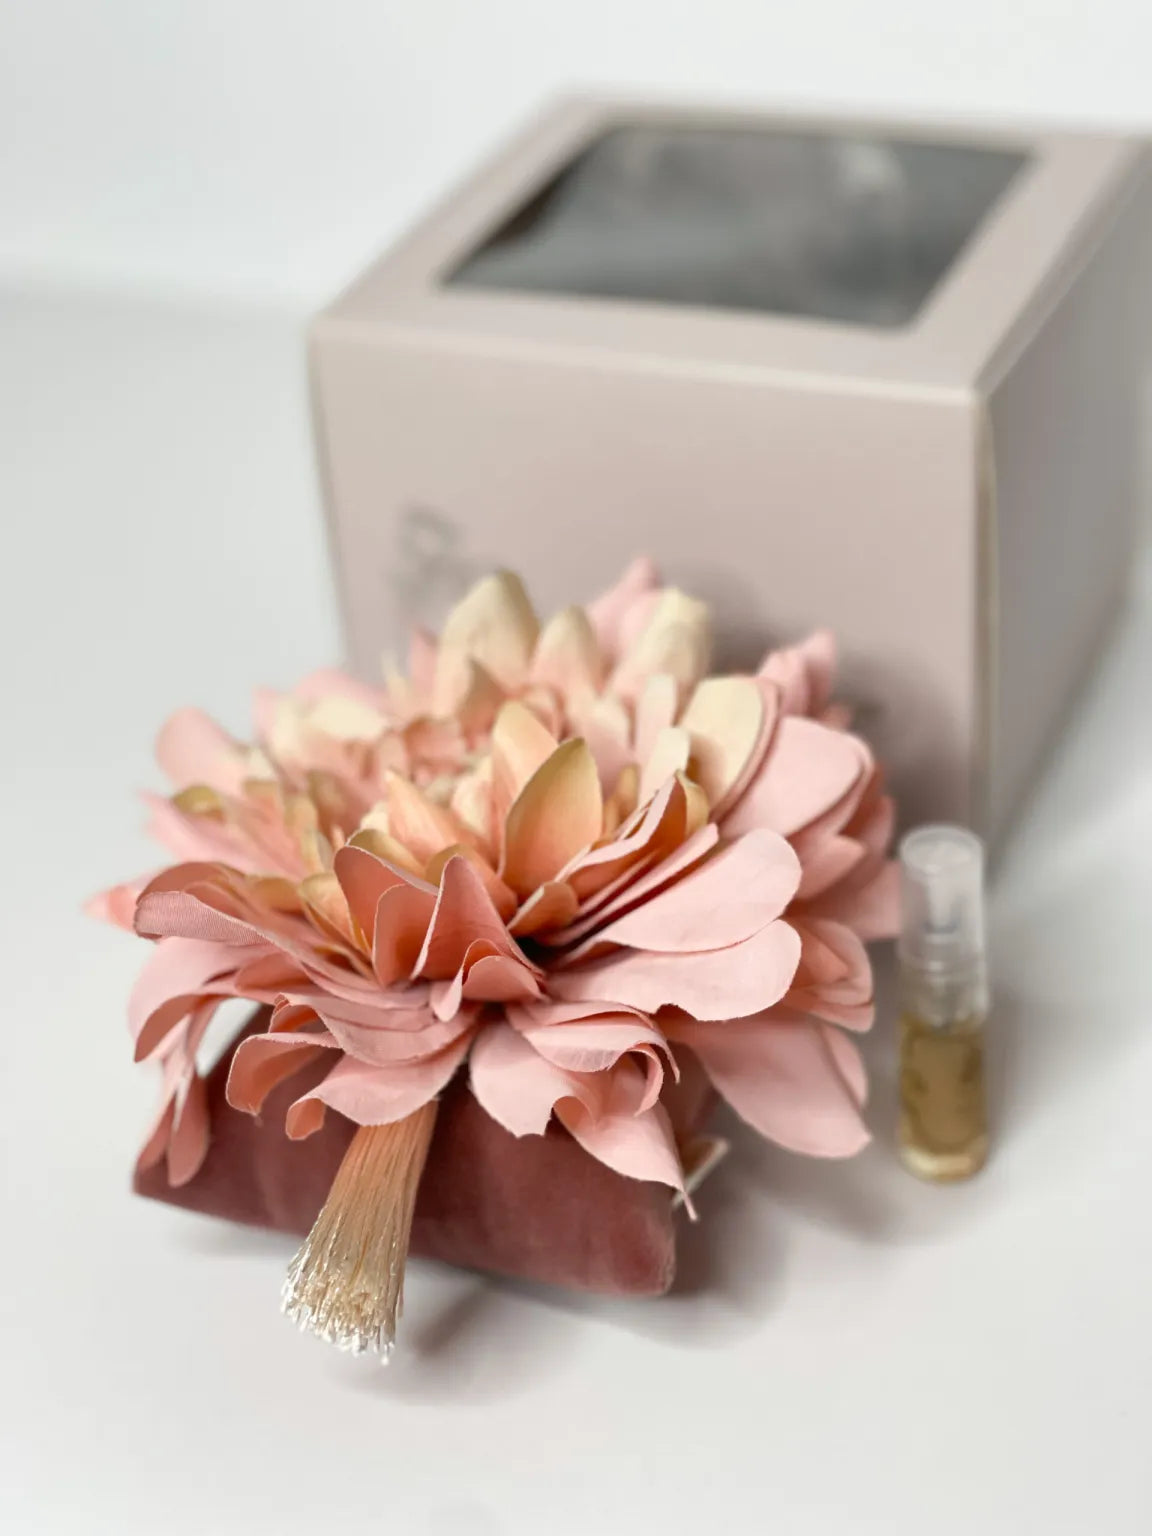 Home fragrance "Peach blossom"